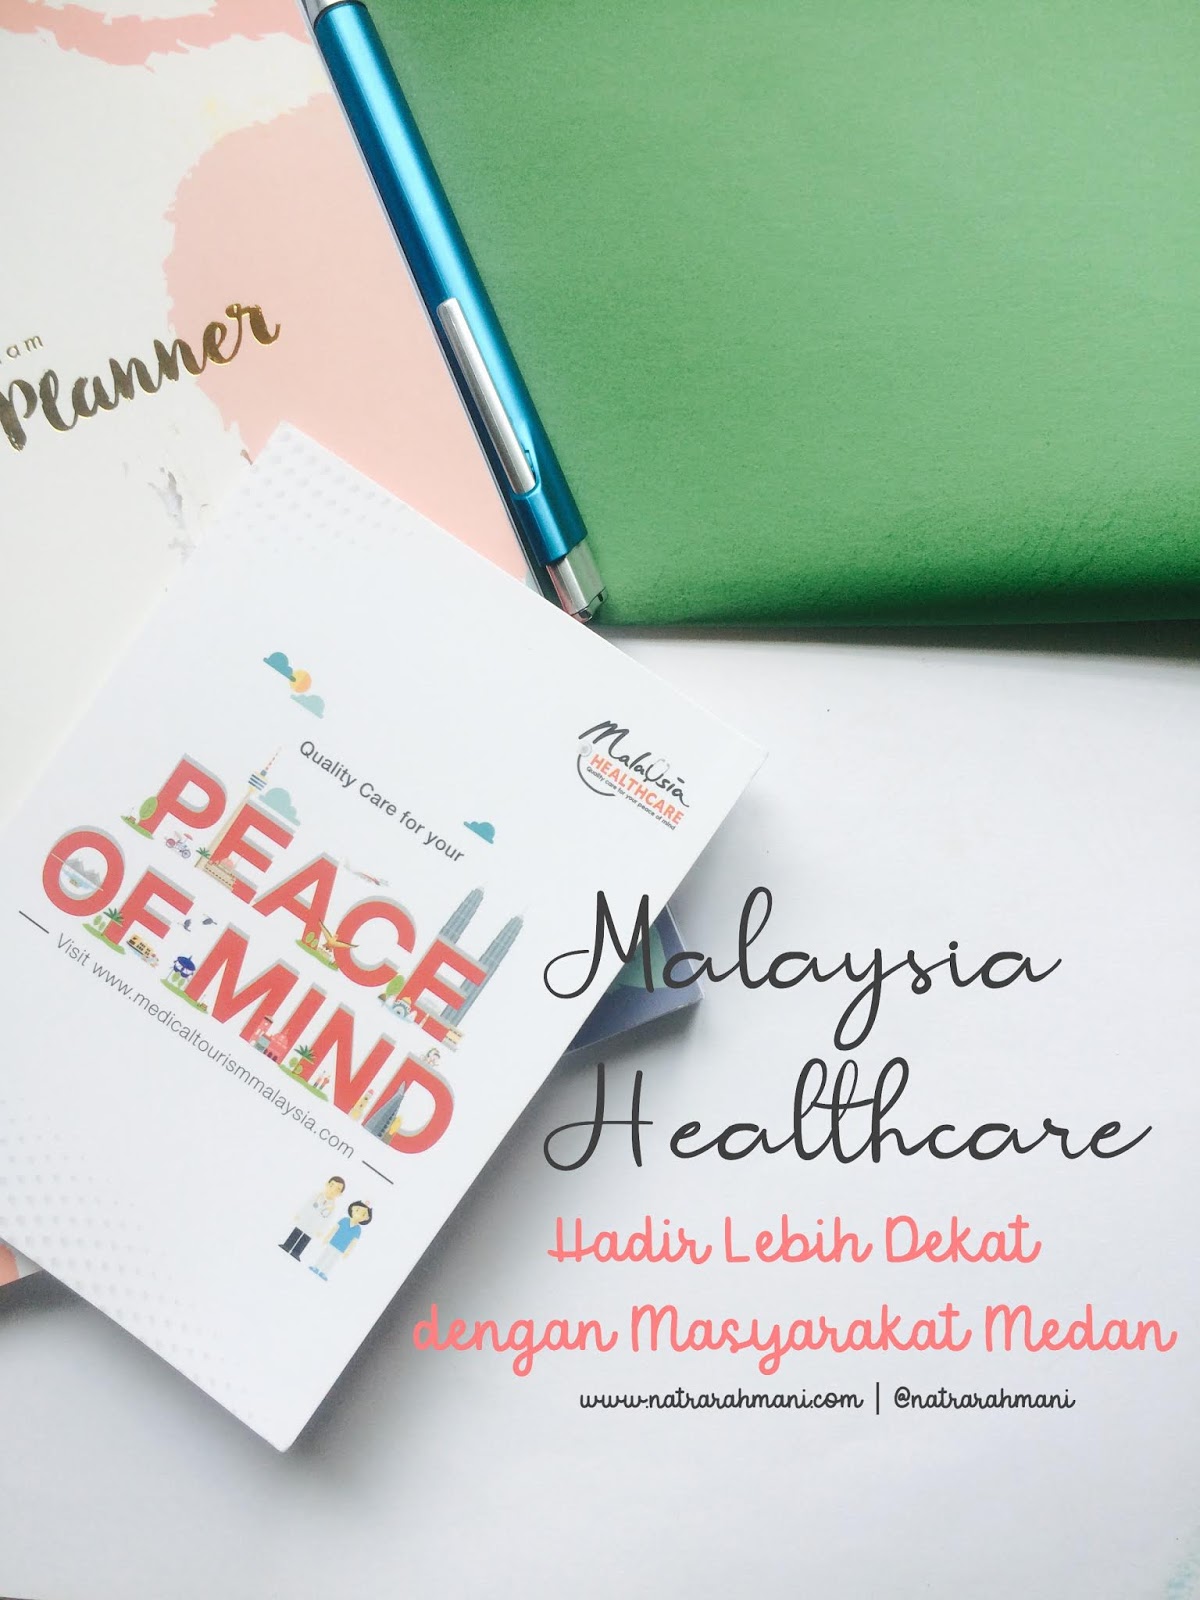 malaysia-healthcare-medan-natrarahmani